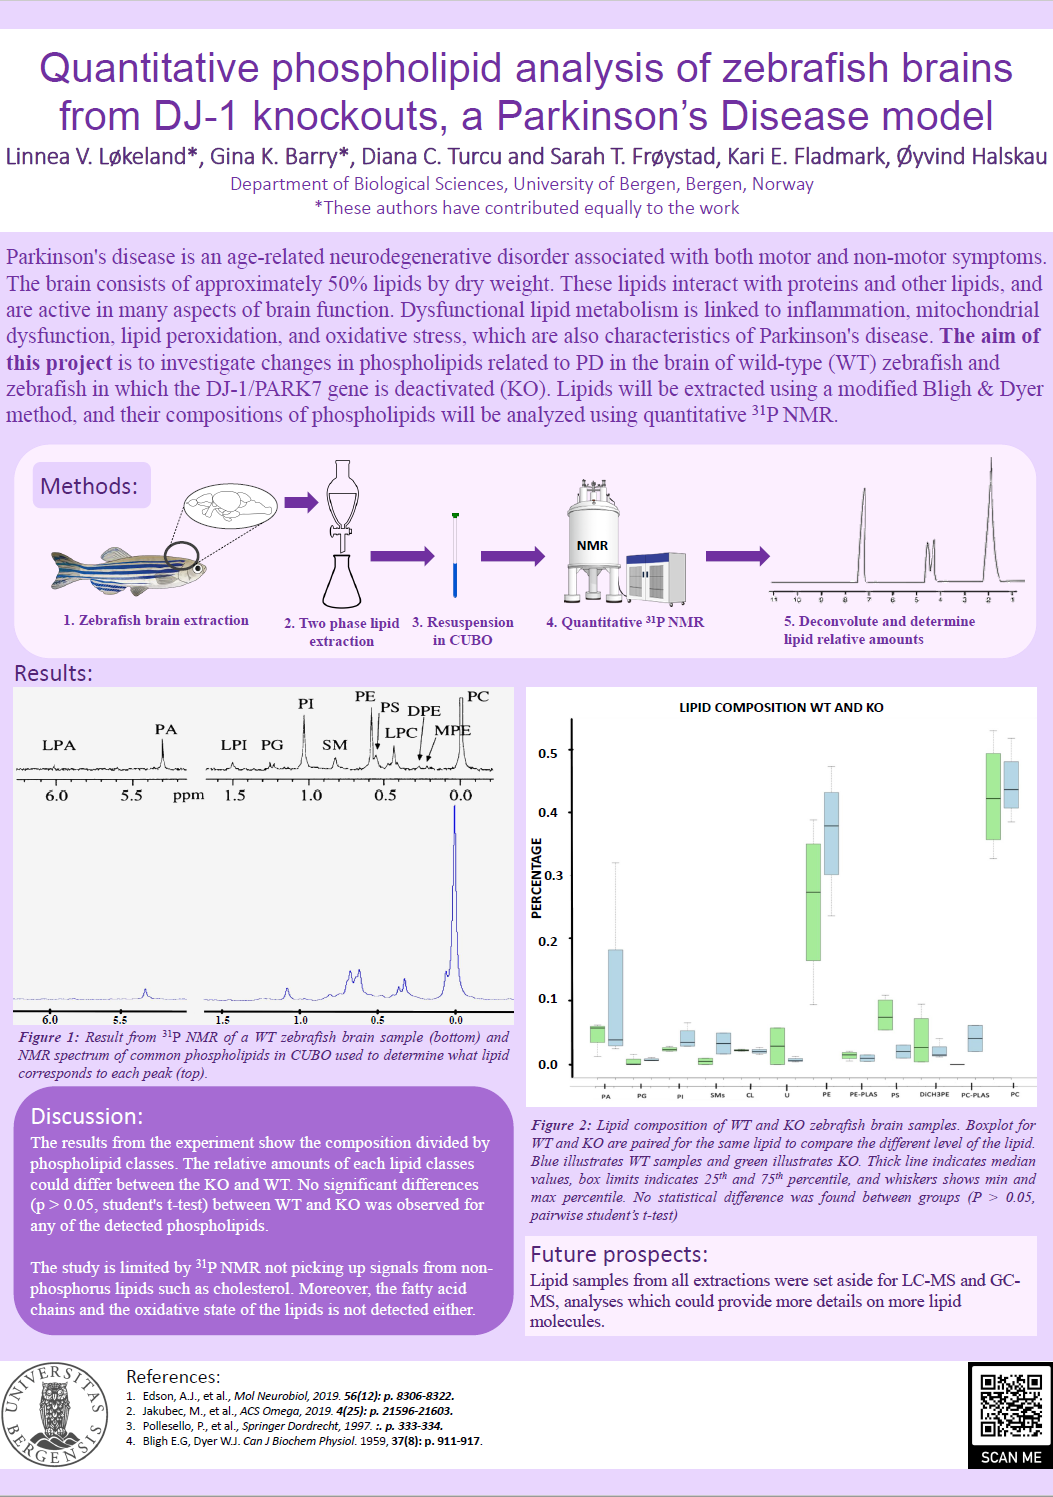 Quantitative phospholipid analysis of zebrafish brains from DJ-1 knockouts, a Parkinson’s Disease model